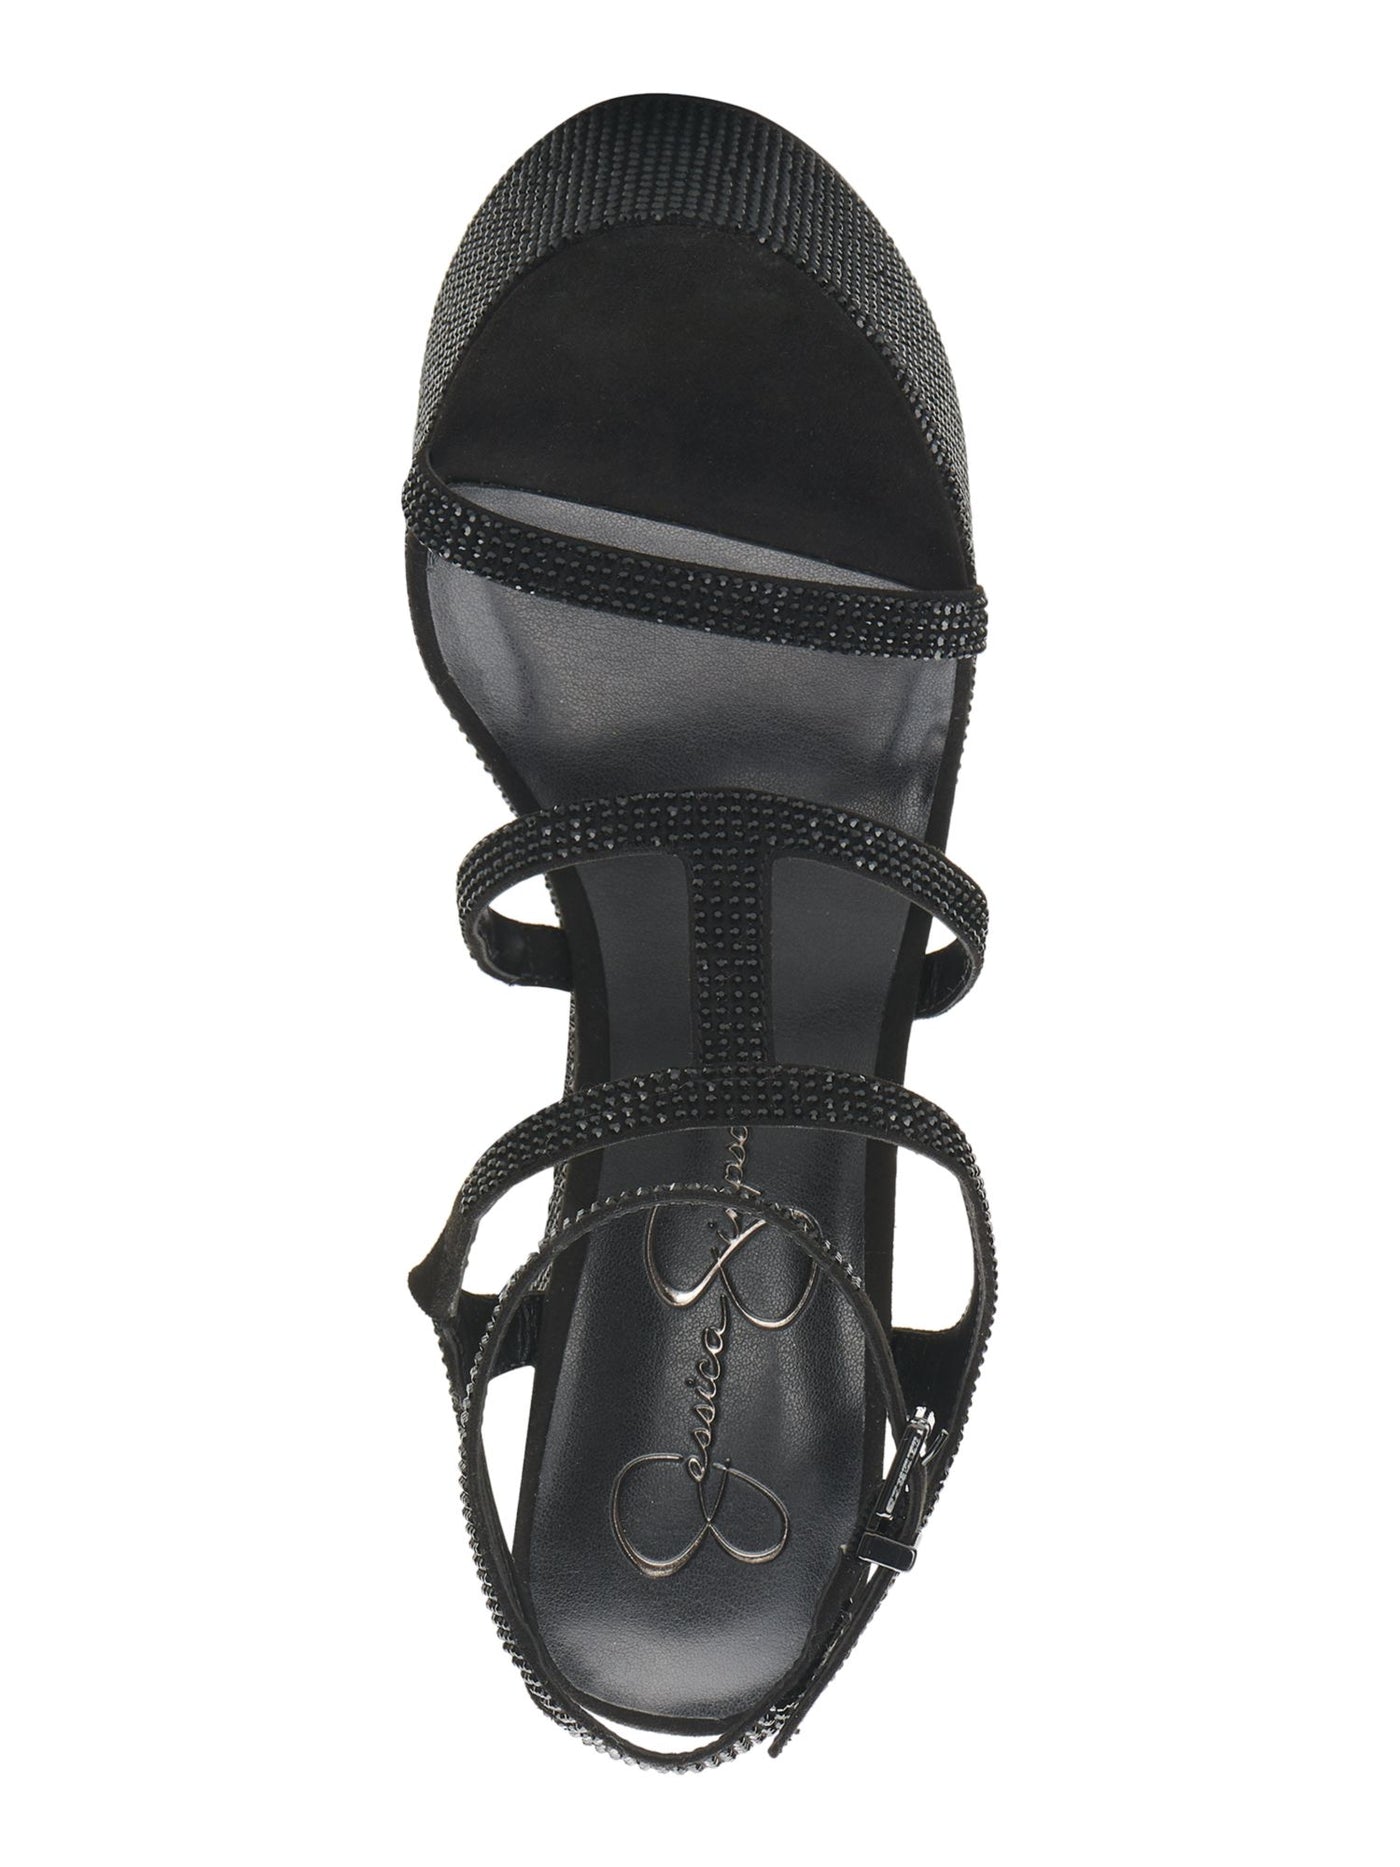 JESSICA SIMPSON Womens Black Mixed Media Padded Strappy Ankle Strap Embellished Meitini Round Toe Platform Buckle Dress Heeled Sandal 9 M